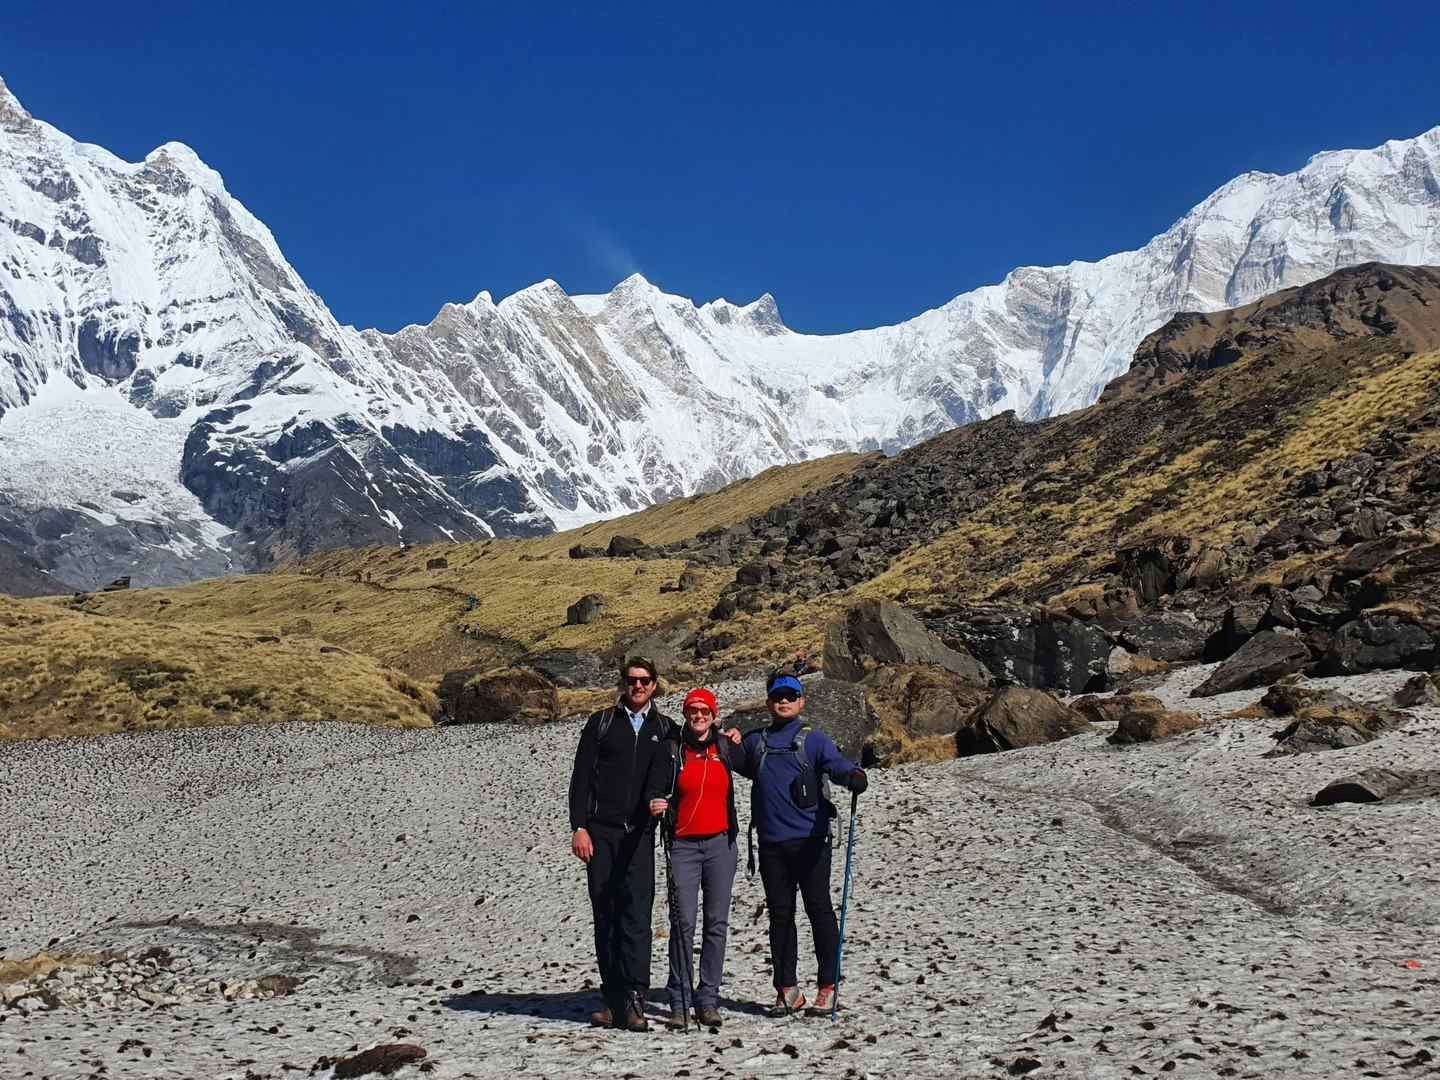 Trekking the Annapurna Sanctuary Route was...